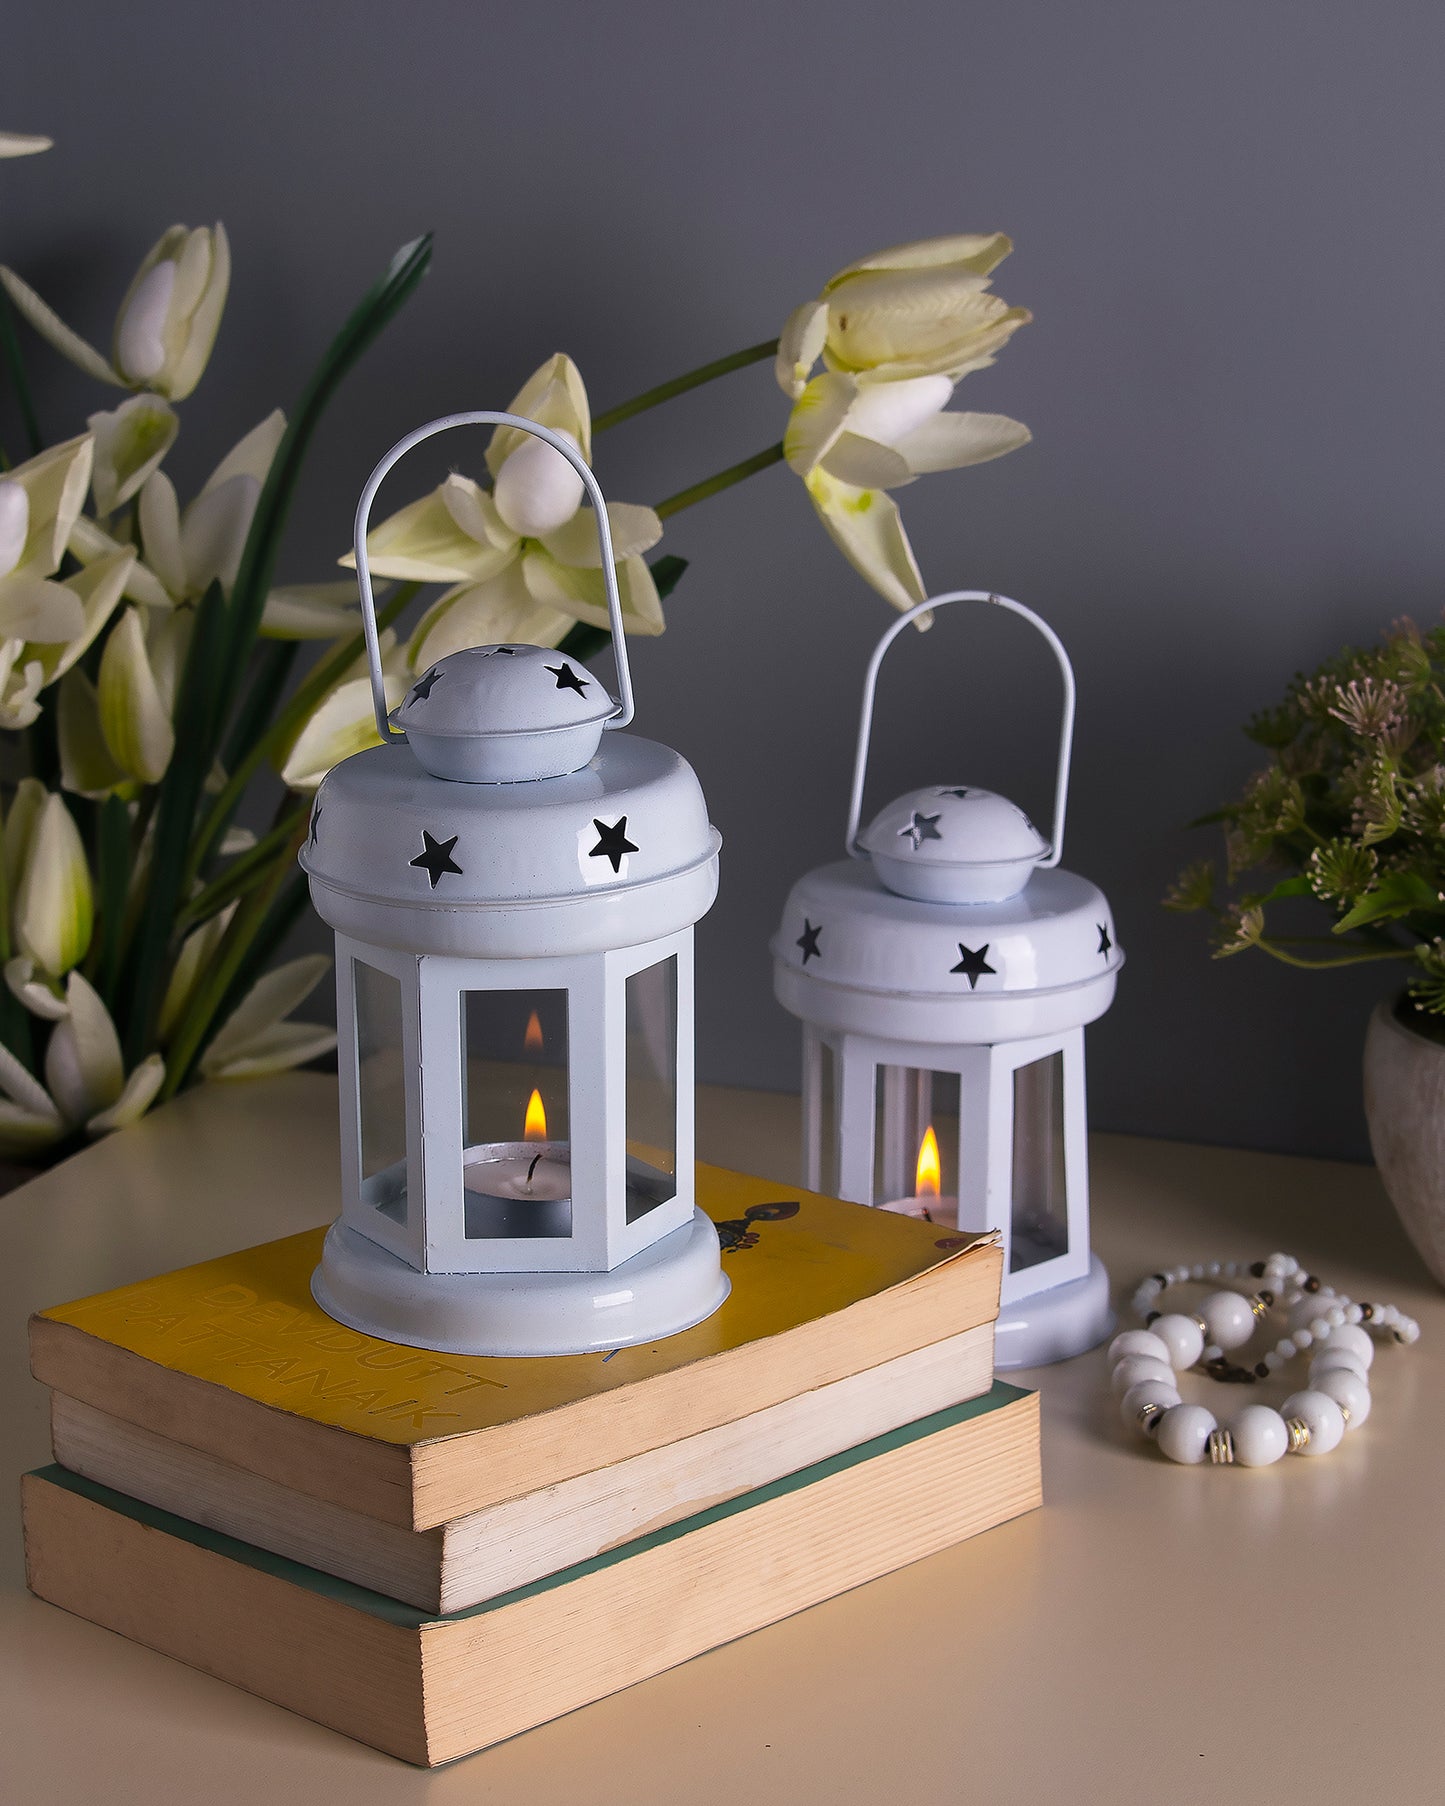 Star Light Decorative Metal Lantern Indoor/Outdoor Hanging Lantern, Set of 2 Designer Candle Tealight Holder